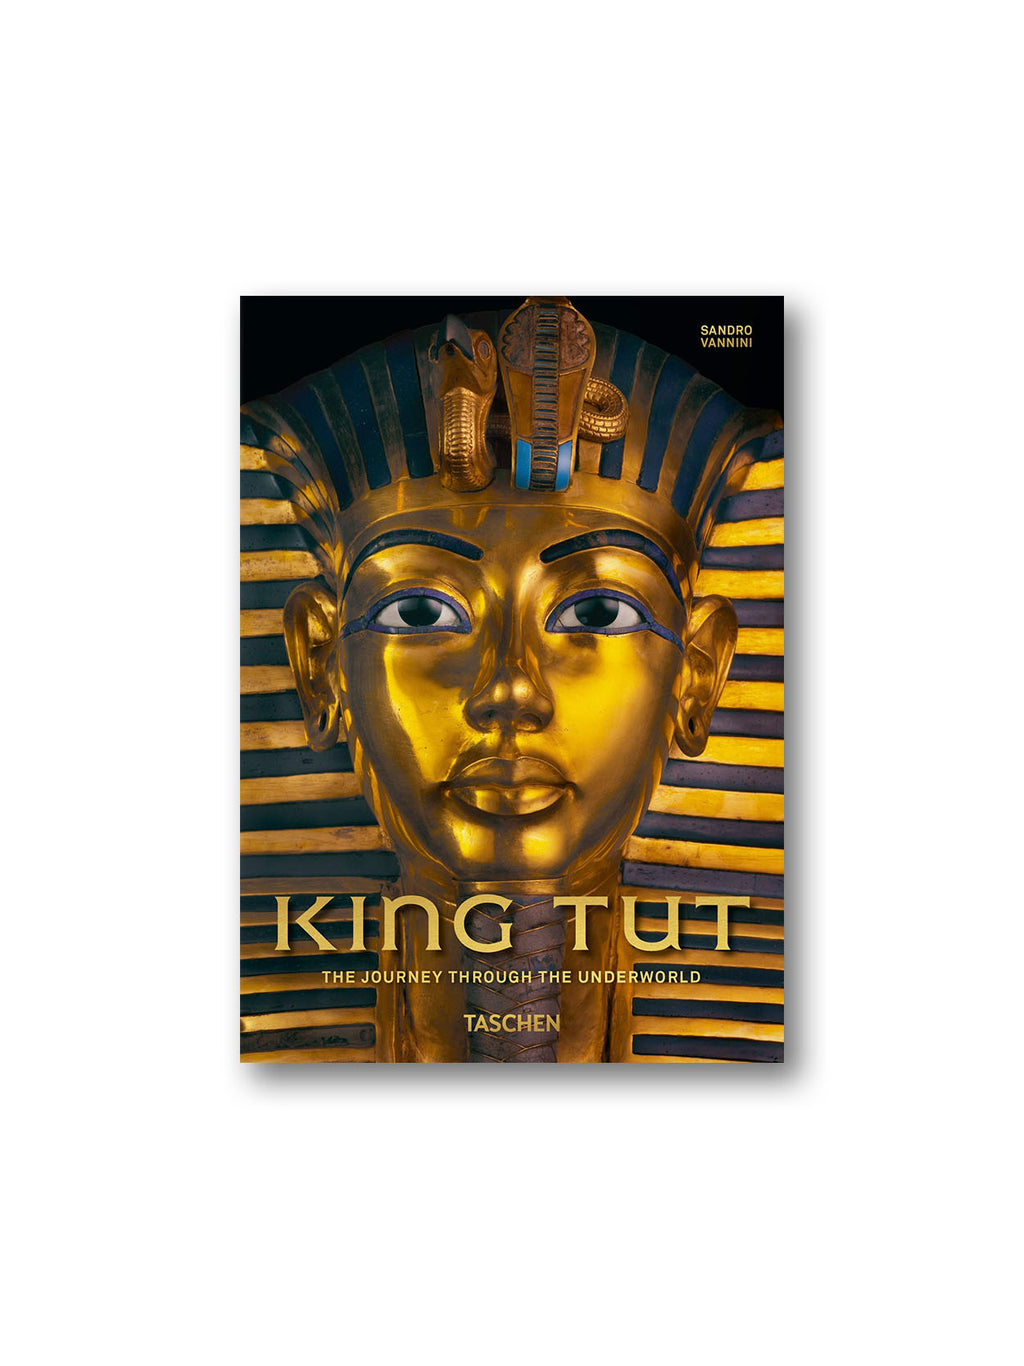 King Tut - The Journey through the Underworld - 40th Anniversary Edition